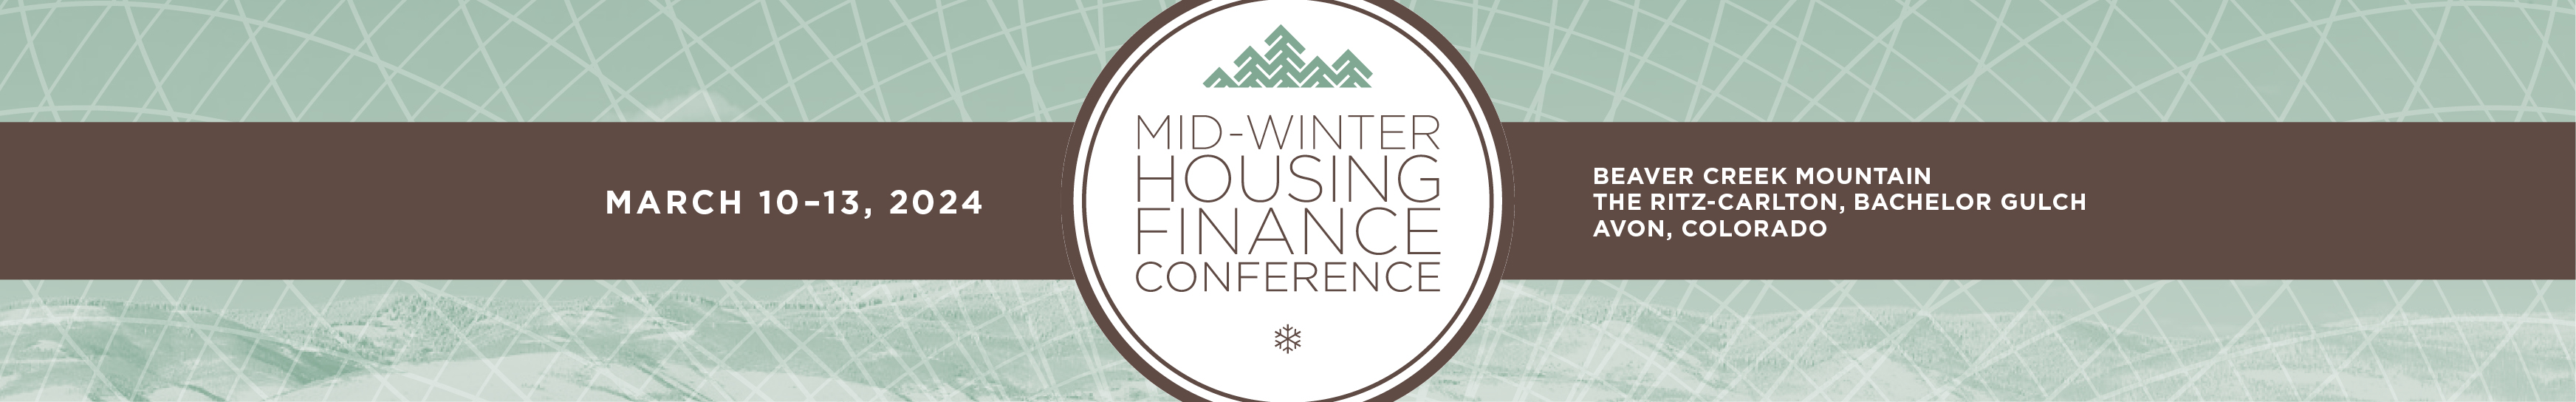 Header banner - Mid-Winter Housing Finance Conference